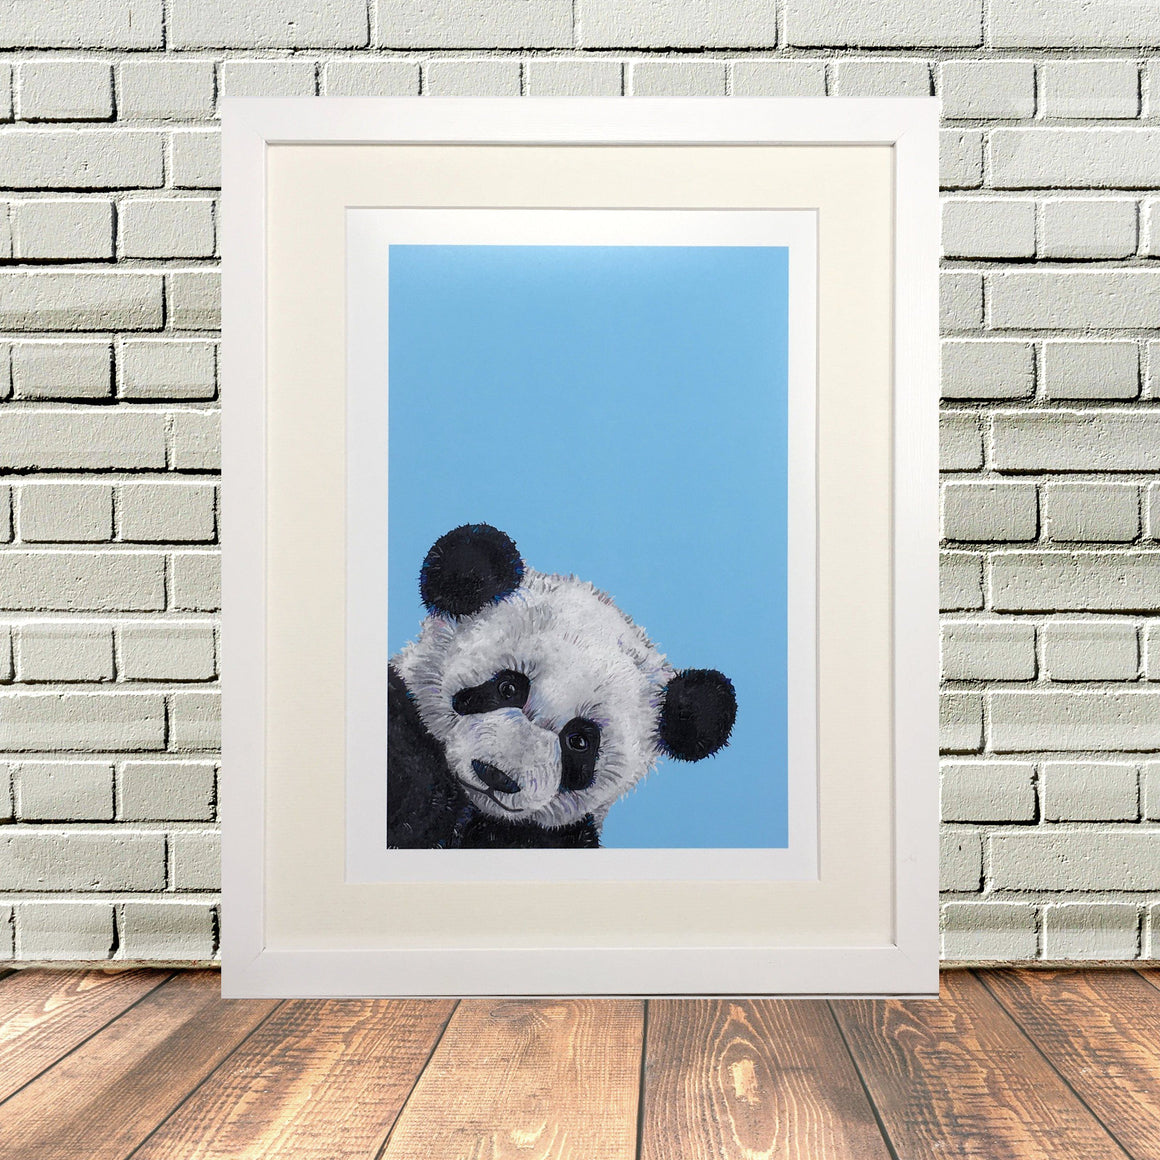 Blue Painted Panda Print